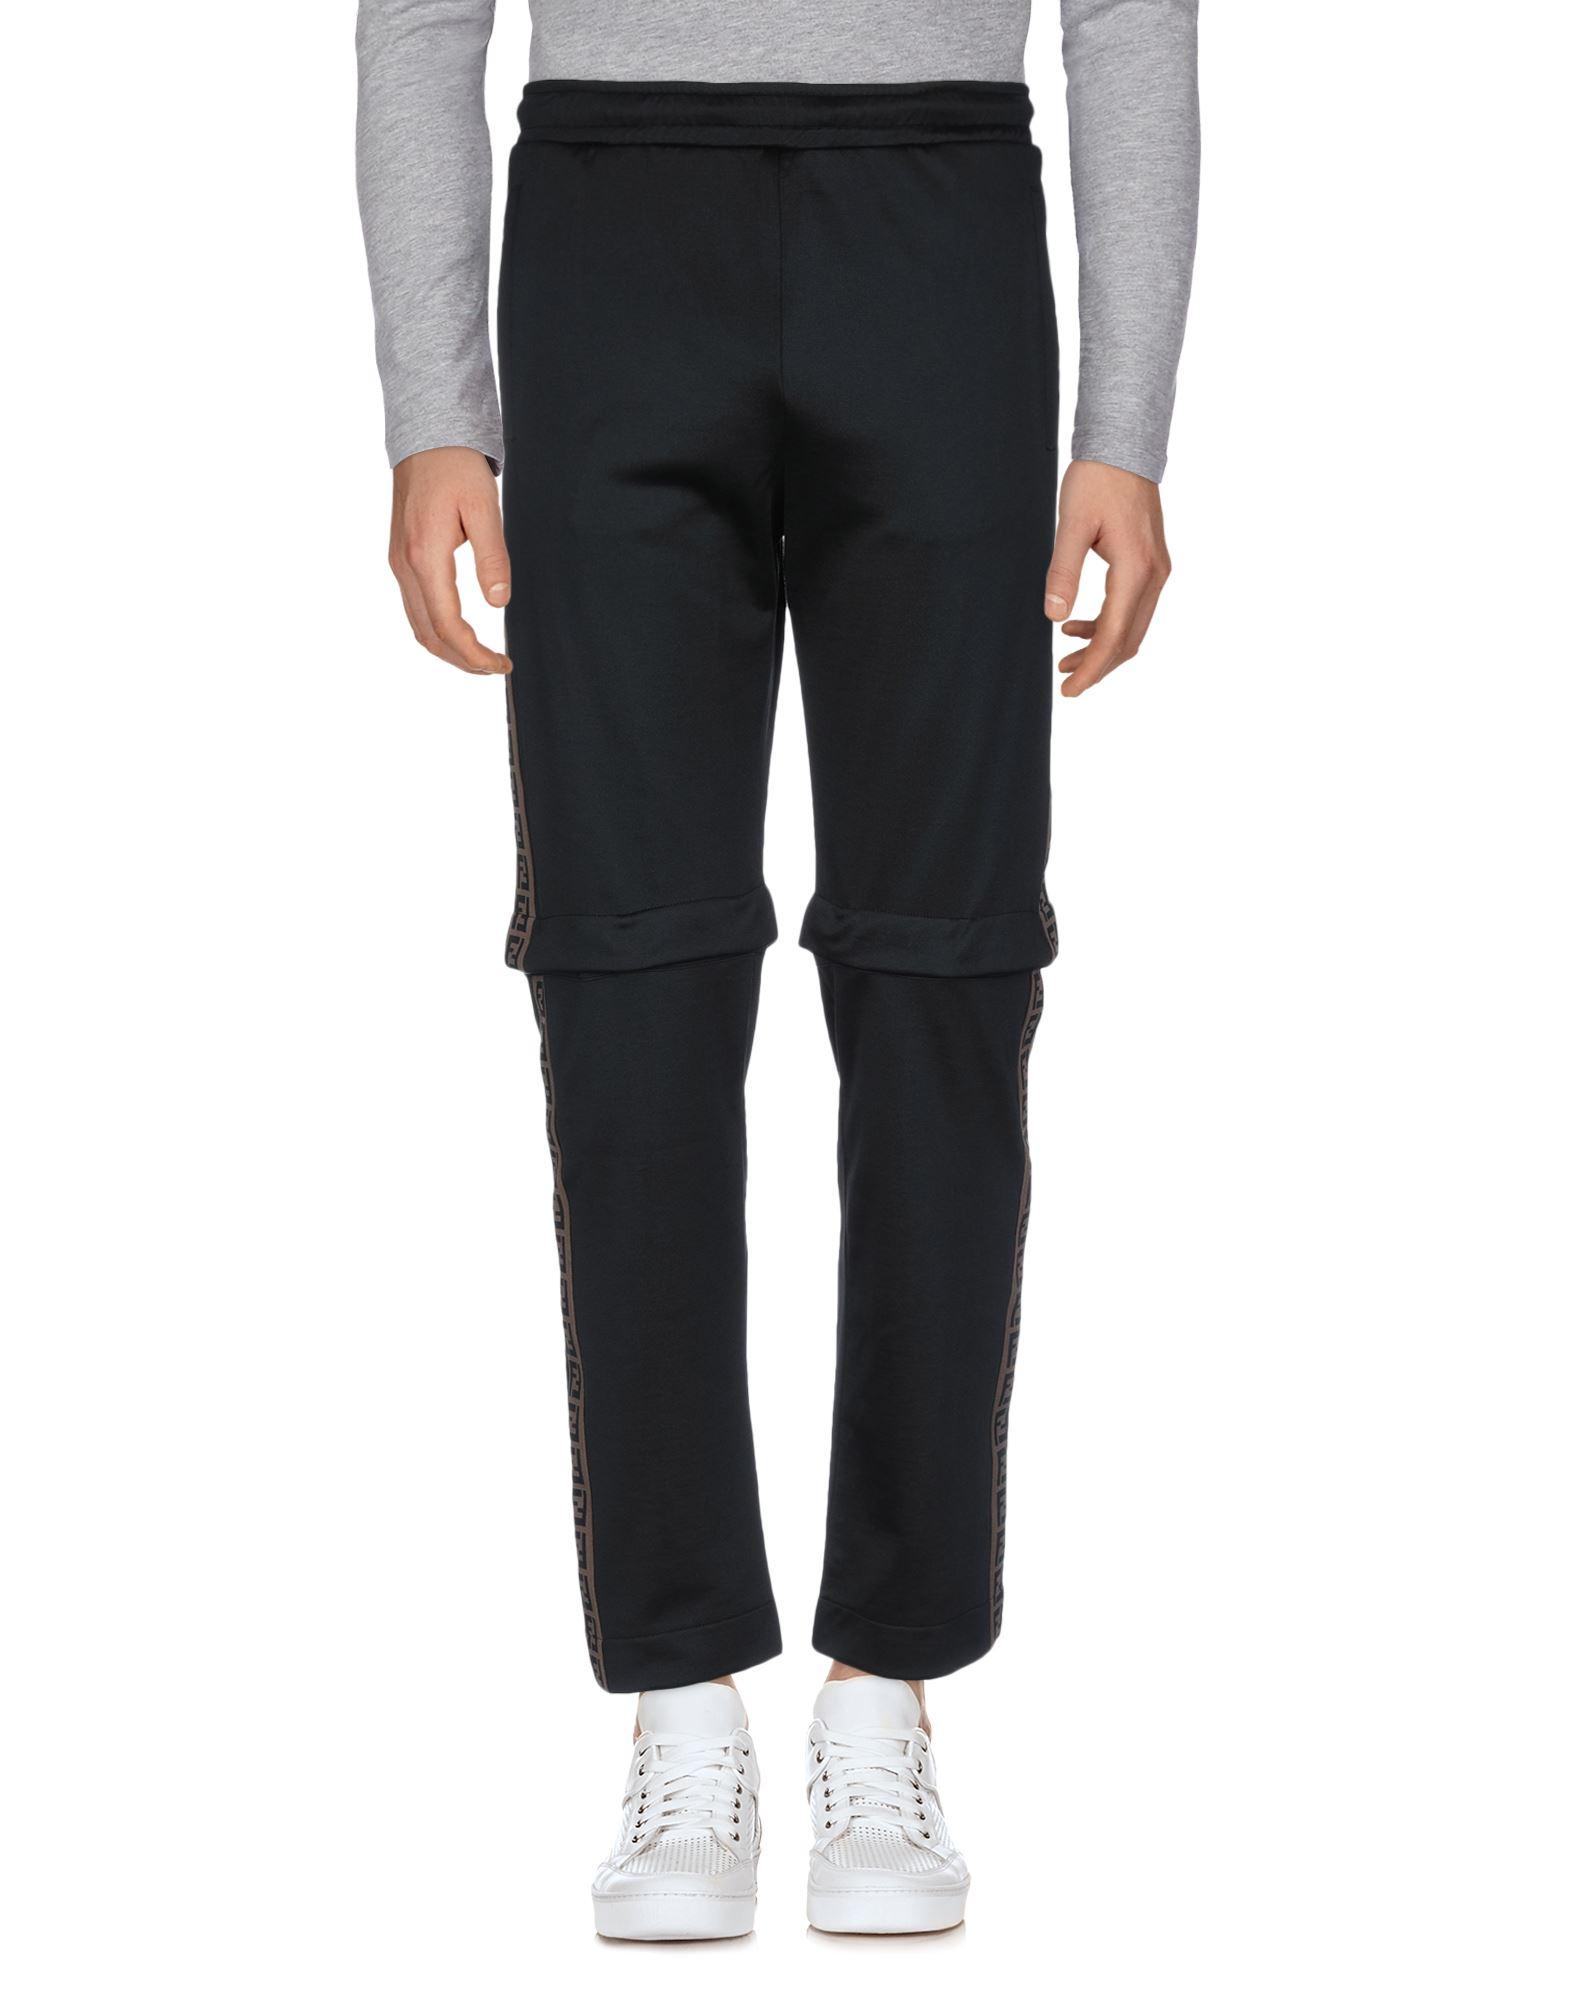 Fendi Synthetic Casual Trouser in Black for Men - Lyst